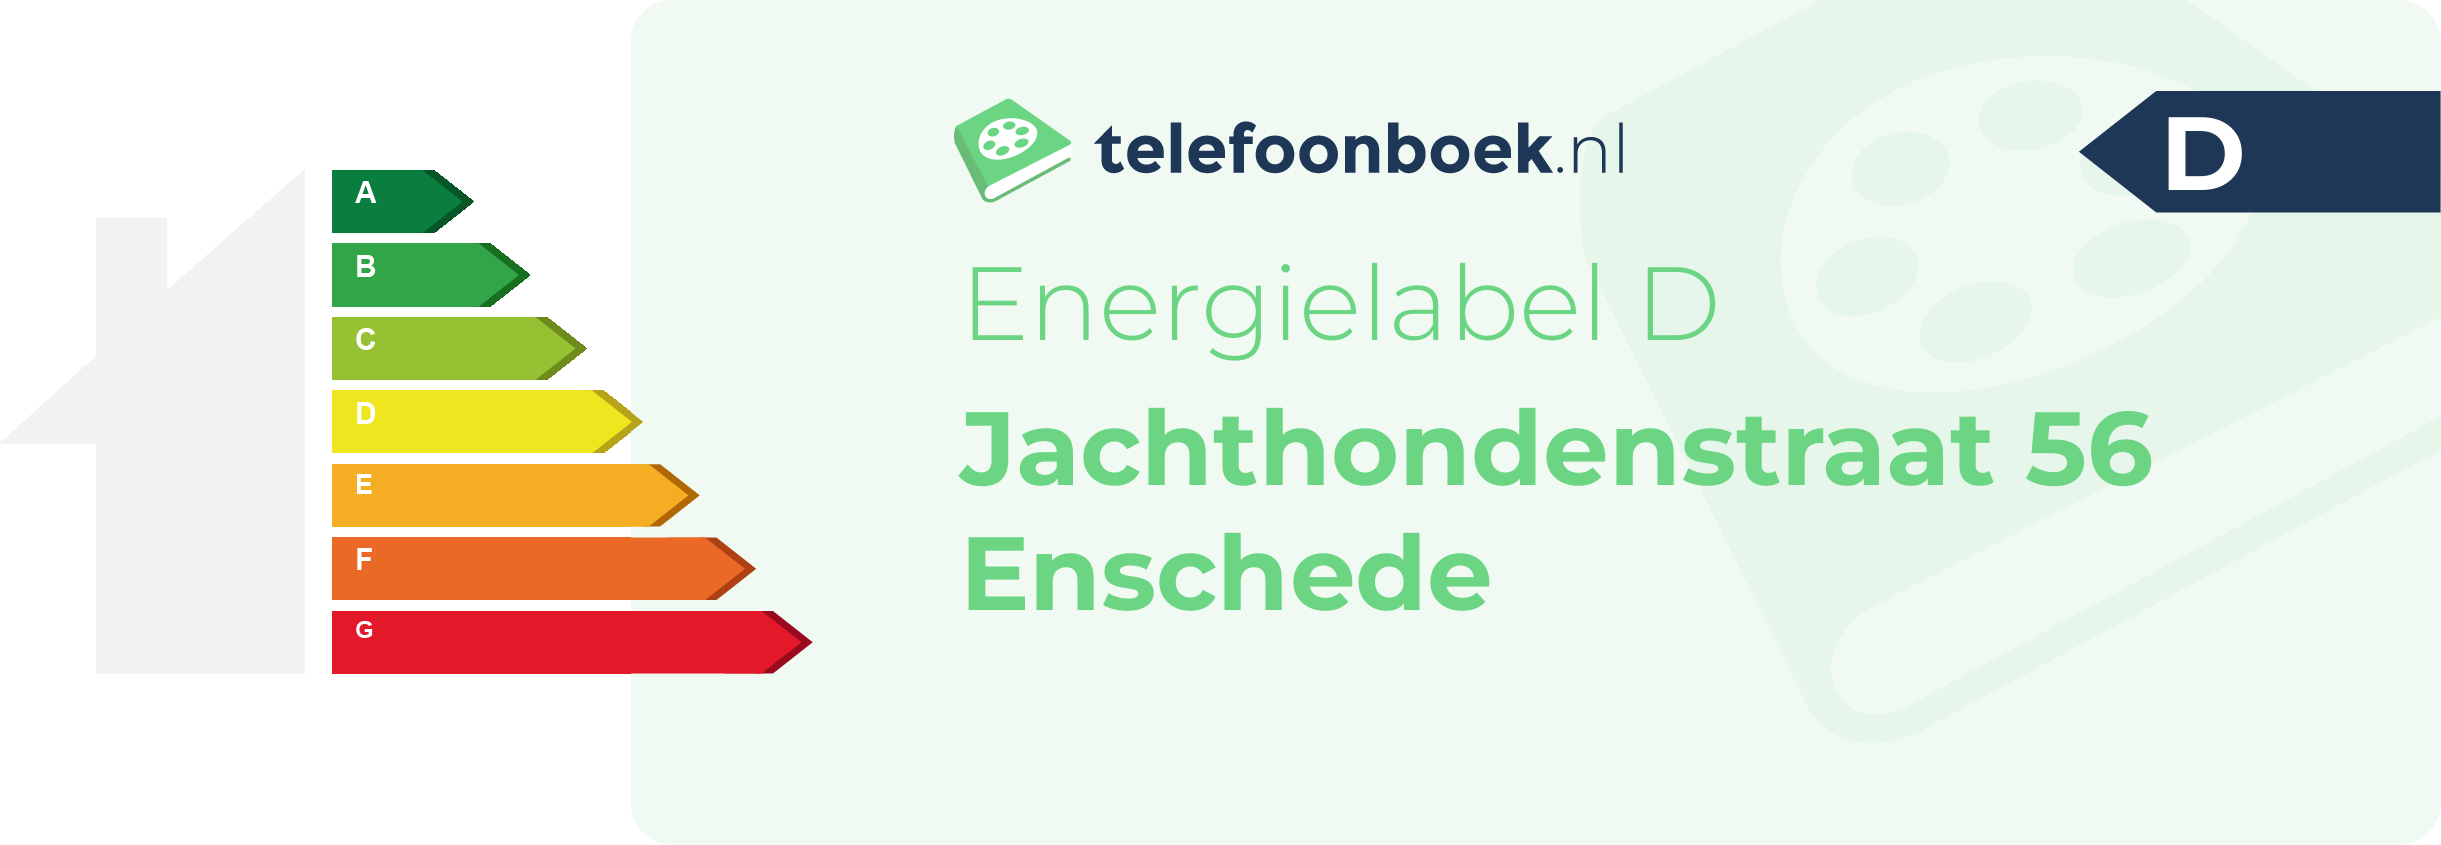 Energielabel Jachthondenstraat 56 Enschede